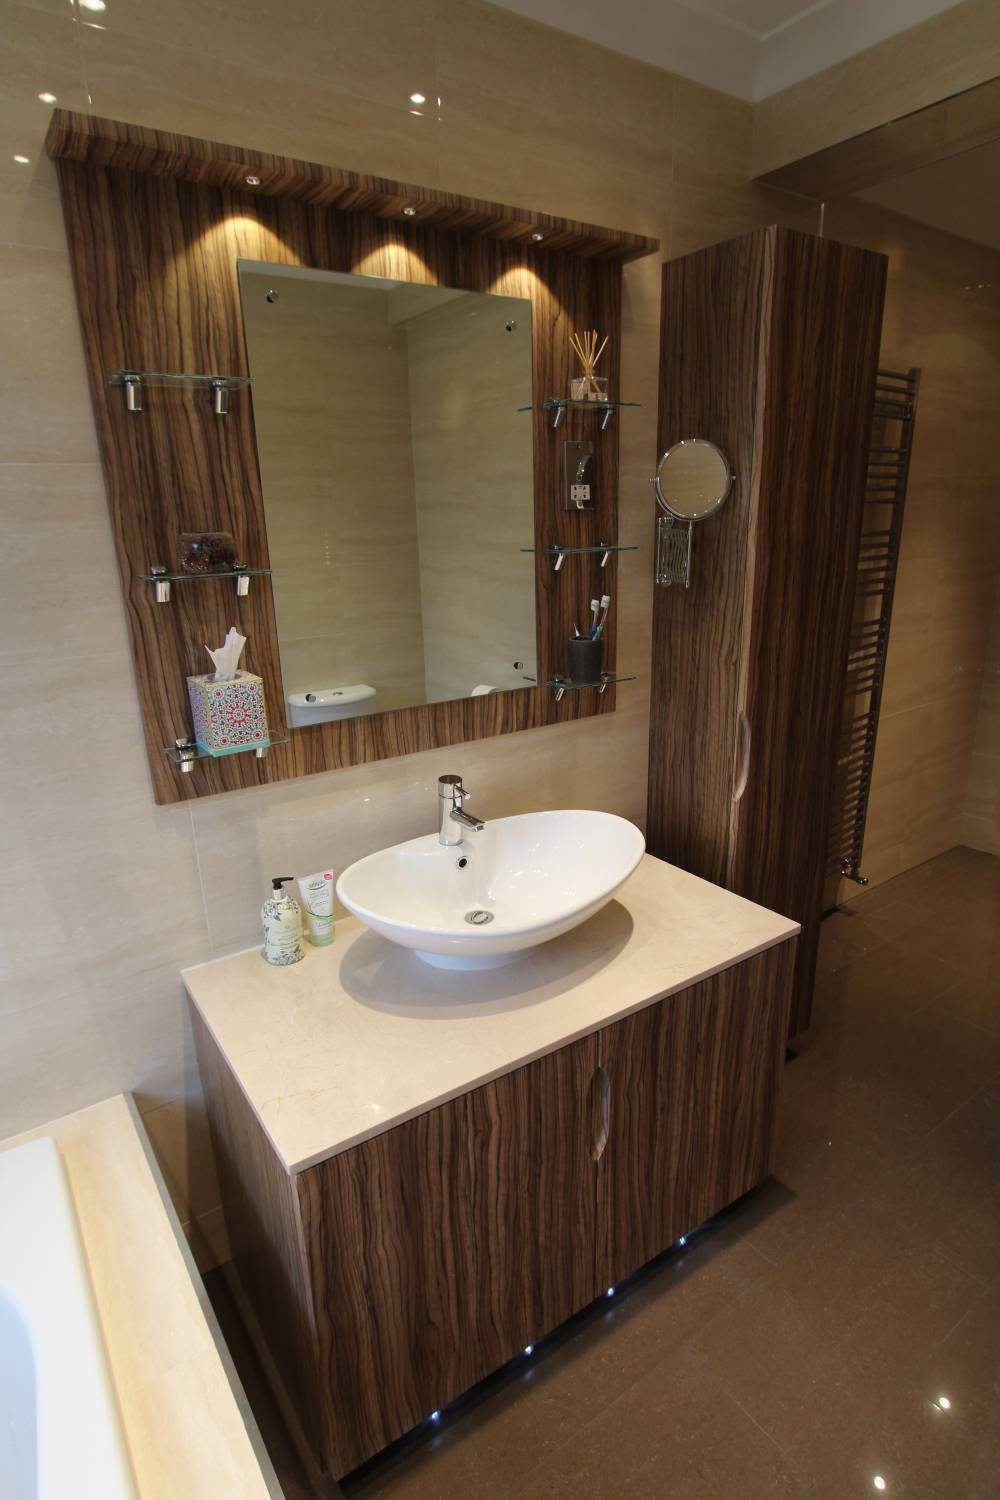 Bespoke Fitted Bathroom Furniture, Bathroom Cabinets, Vanity Units